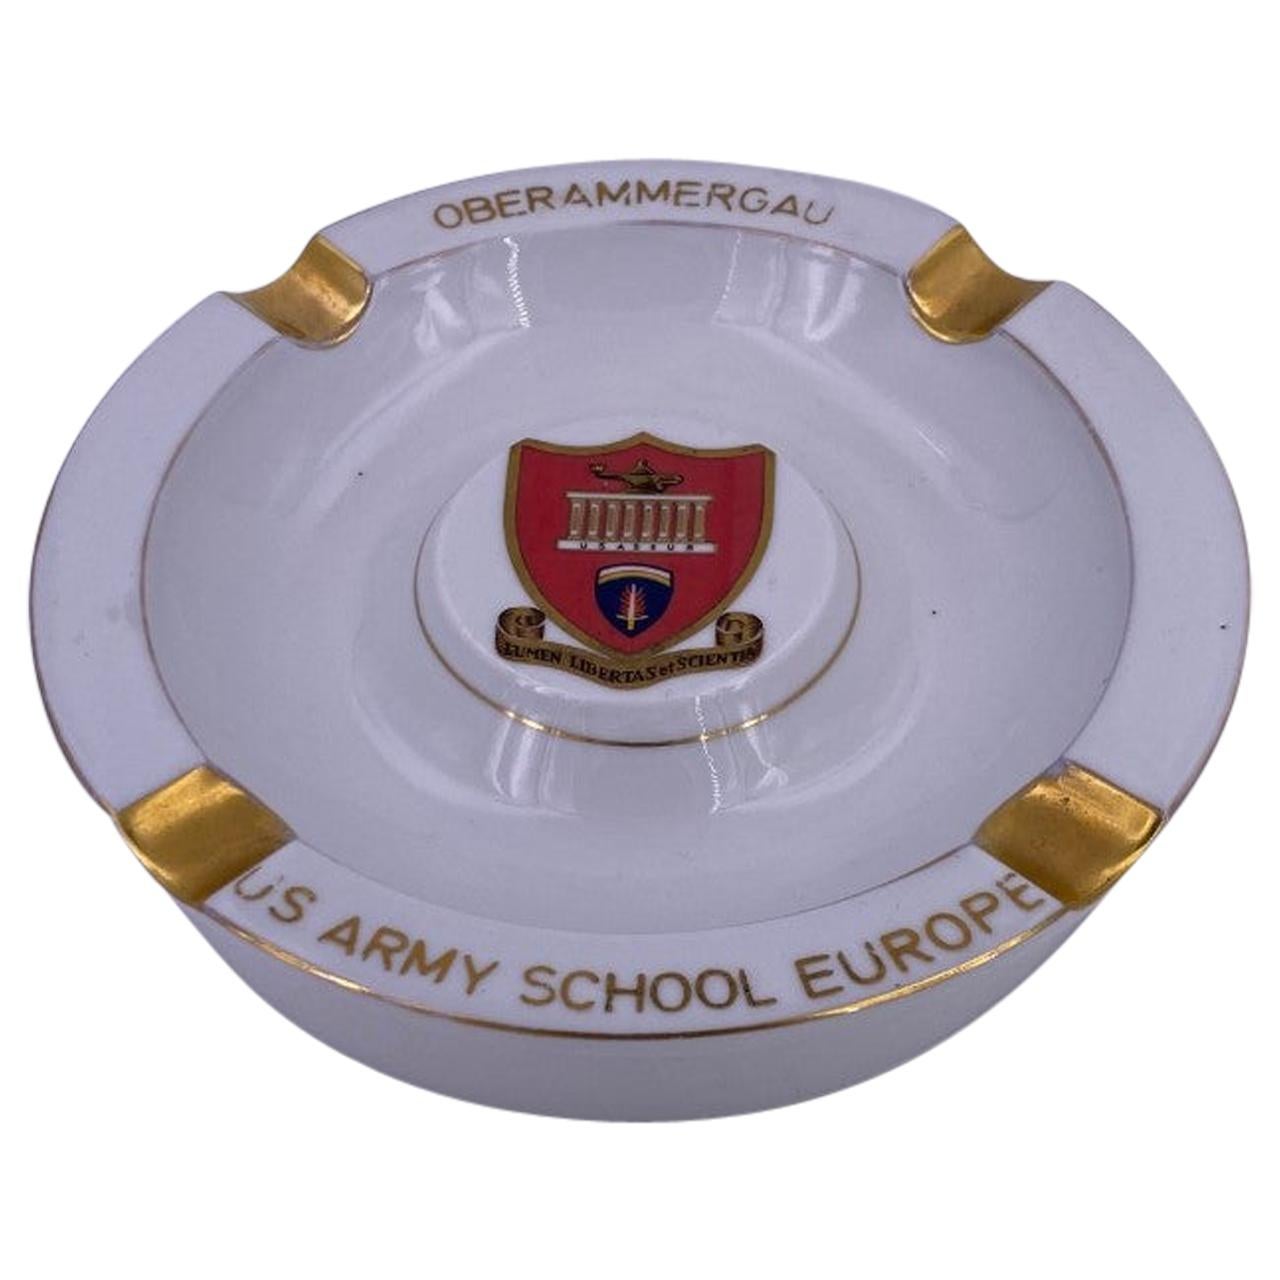 Vintage Ashtray US Oberammergau US Army School